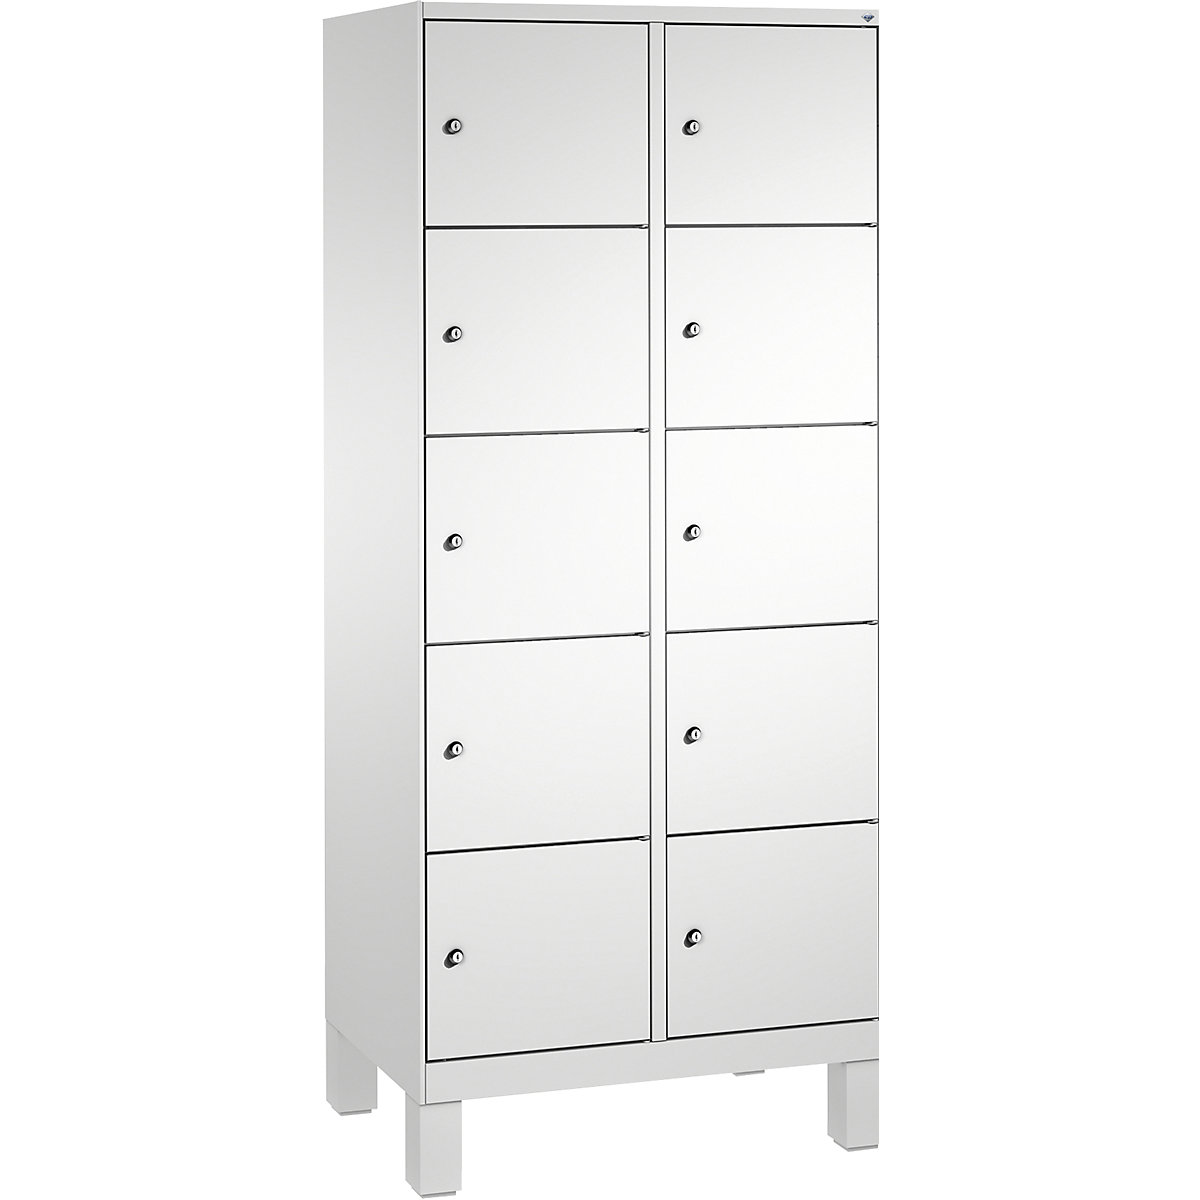 EVOLO locker unit, with feet – C+P, 2 compartments, 5 shelf compartments each, compartment width 400 mm, light grey-8